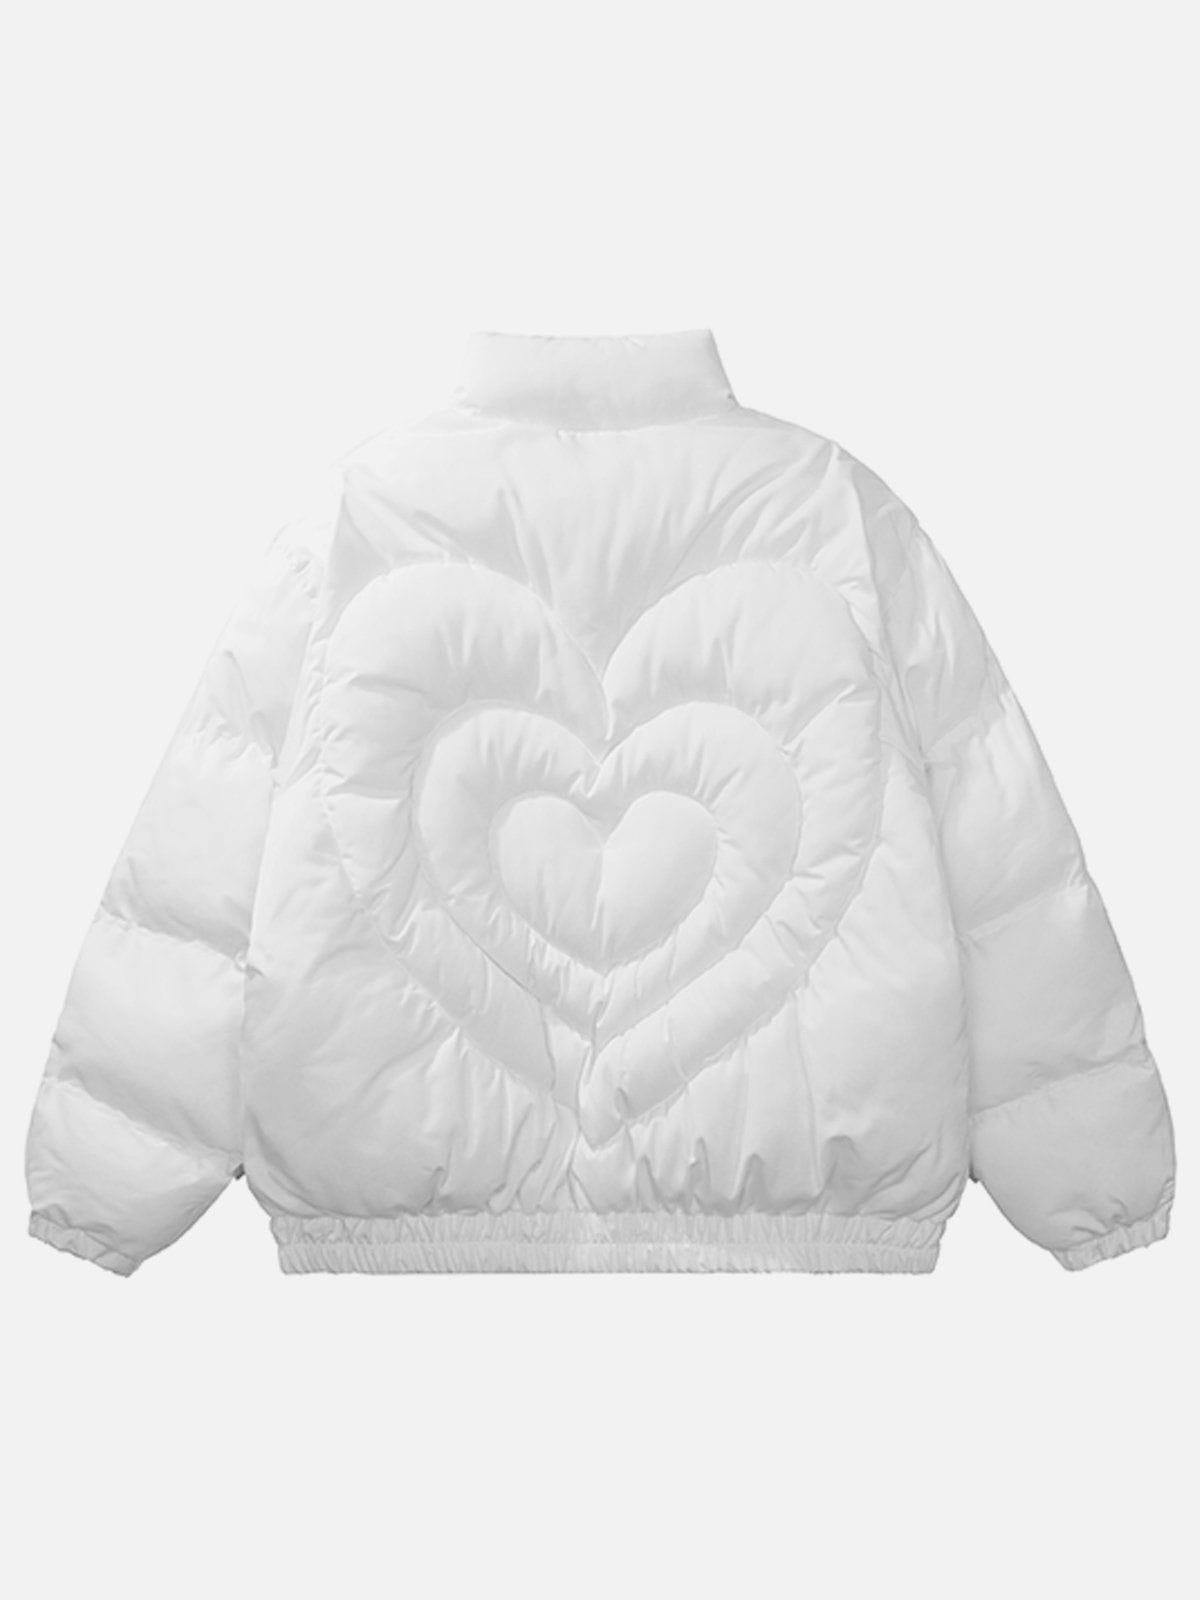 Sneakerland™ - Solid Color Heart Design Winter Coat